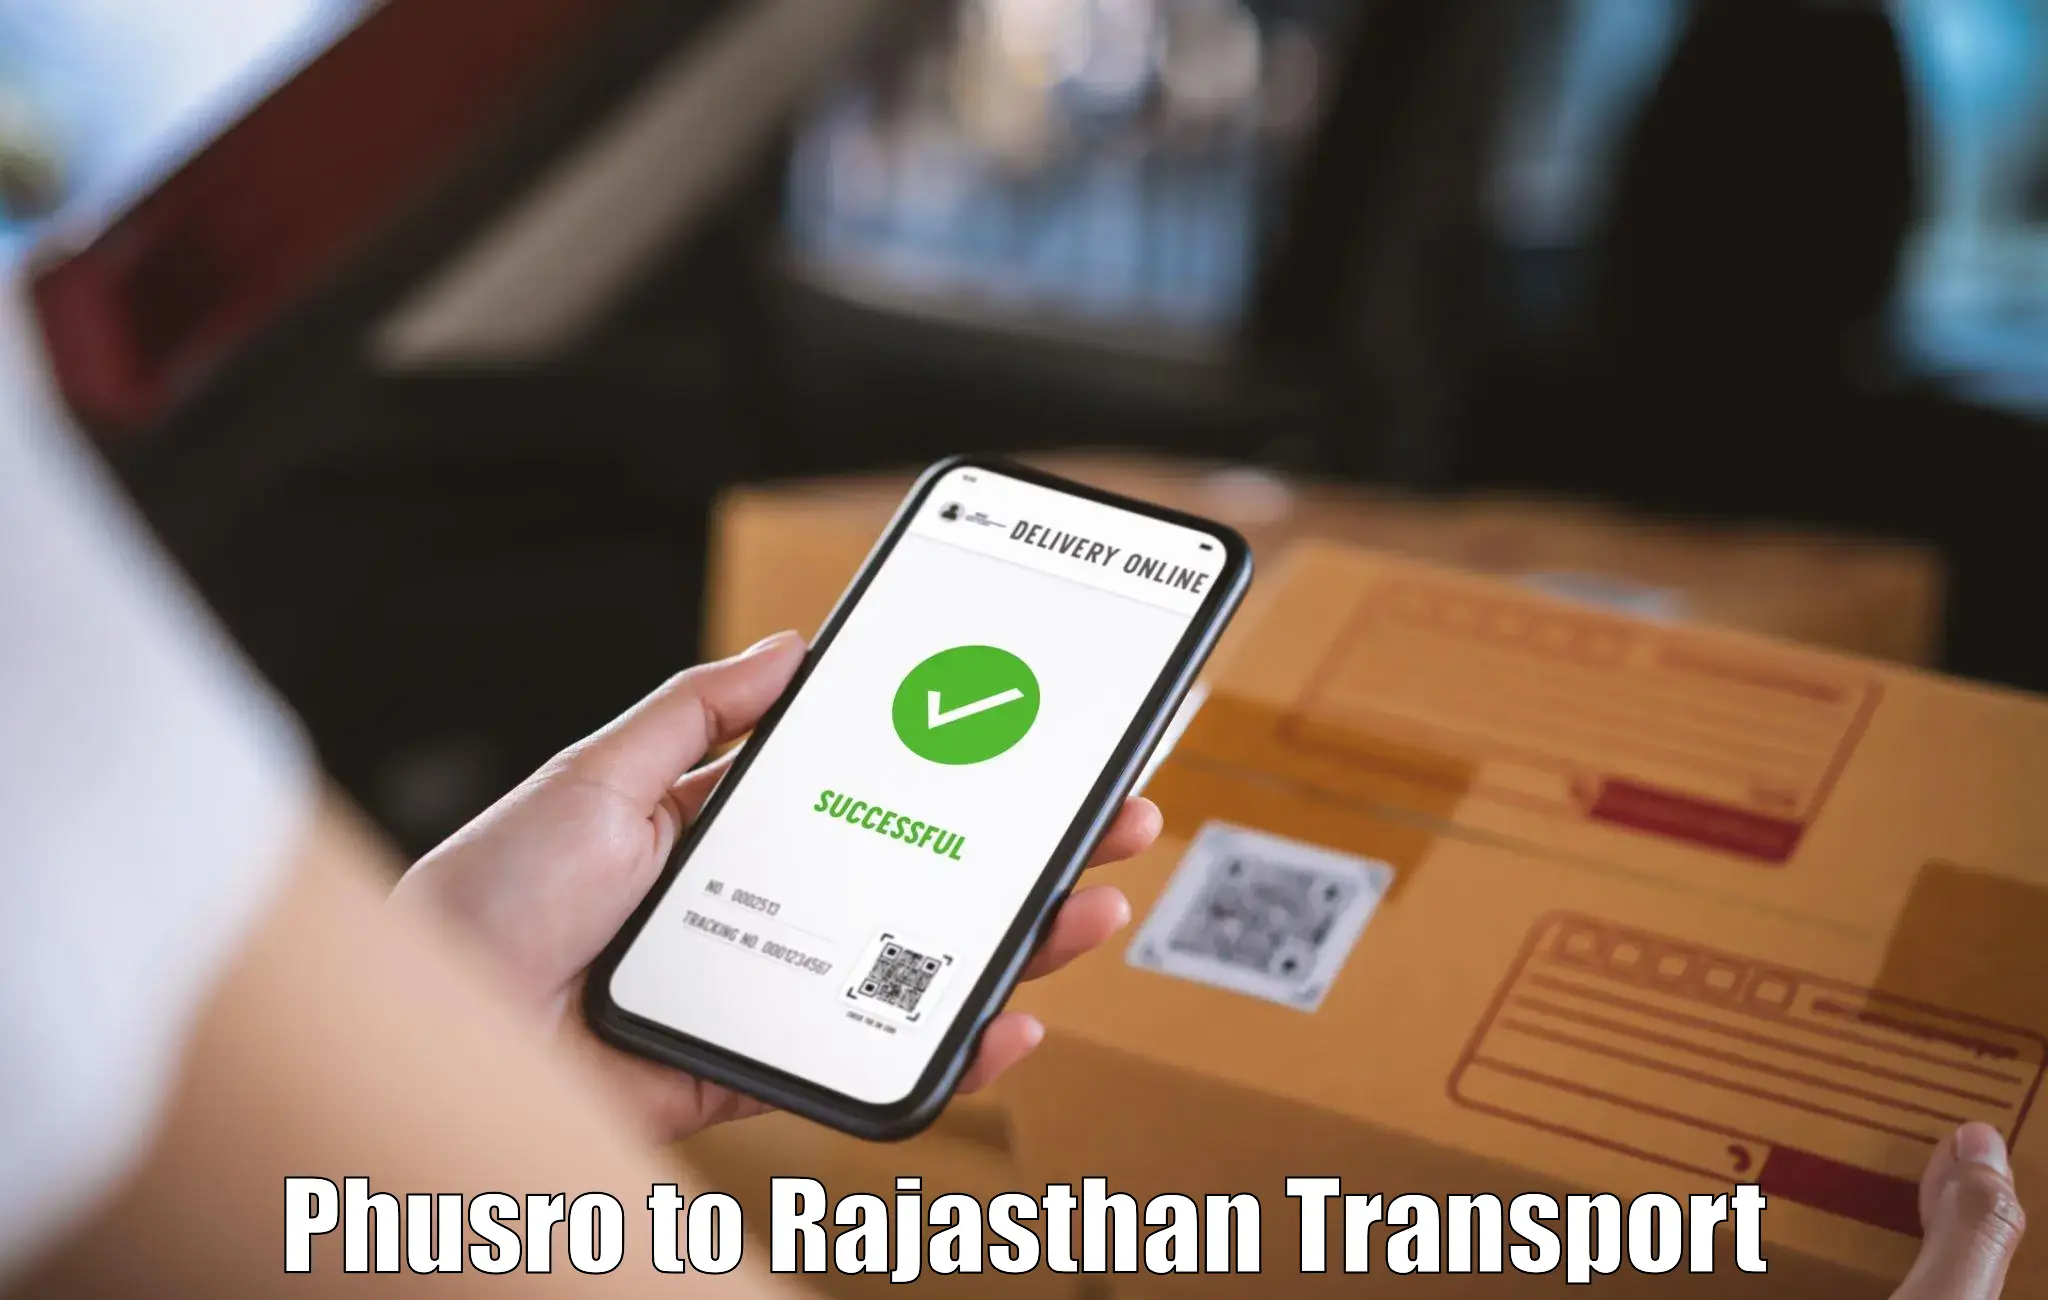 Transport in sharing Phusro to Nasirabad